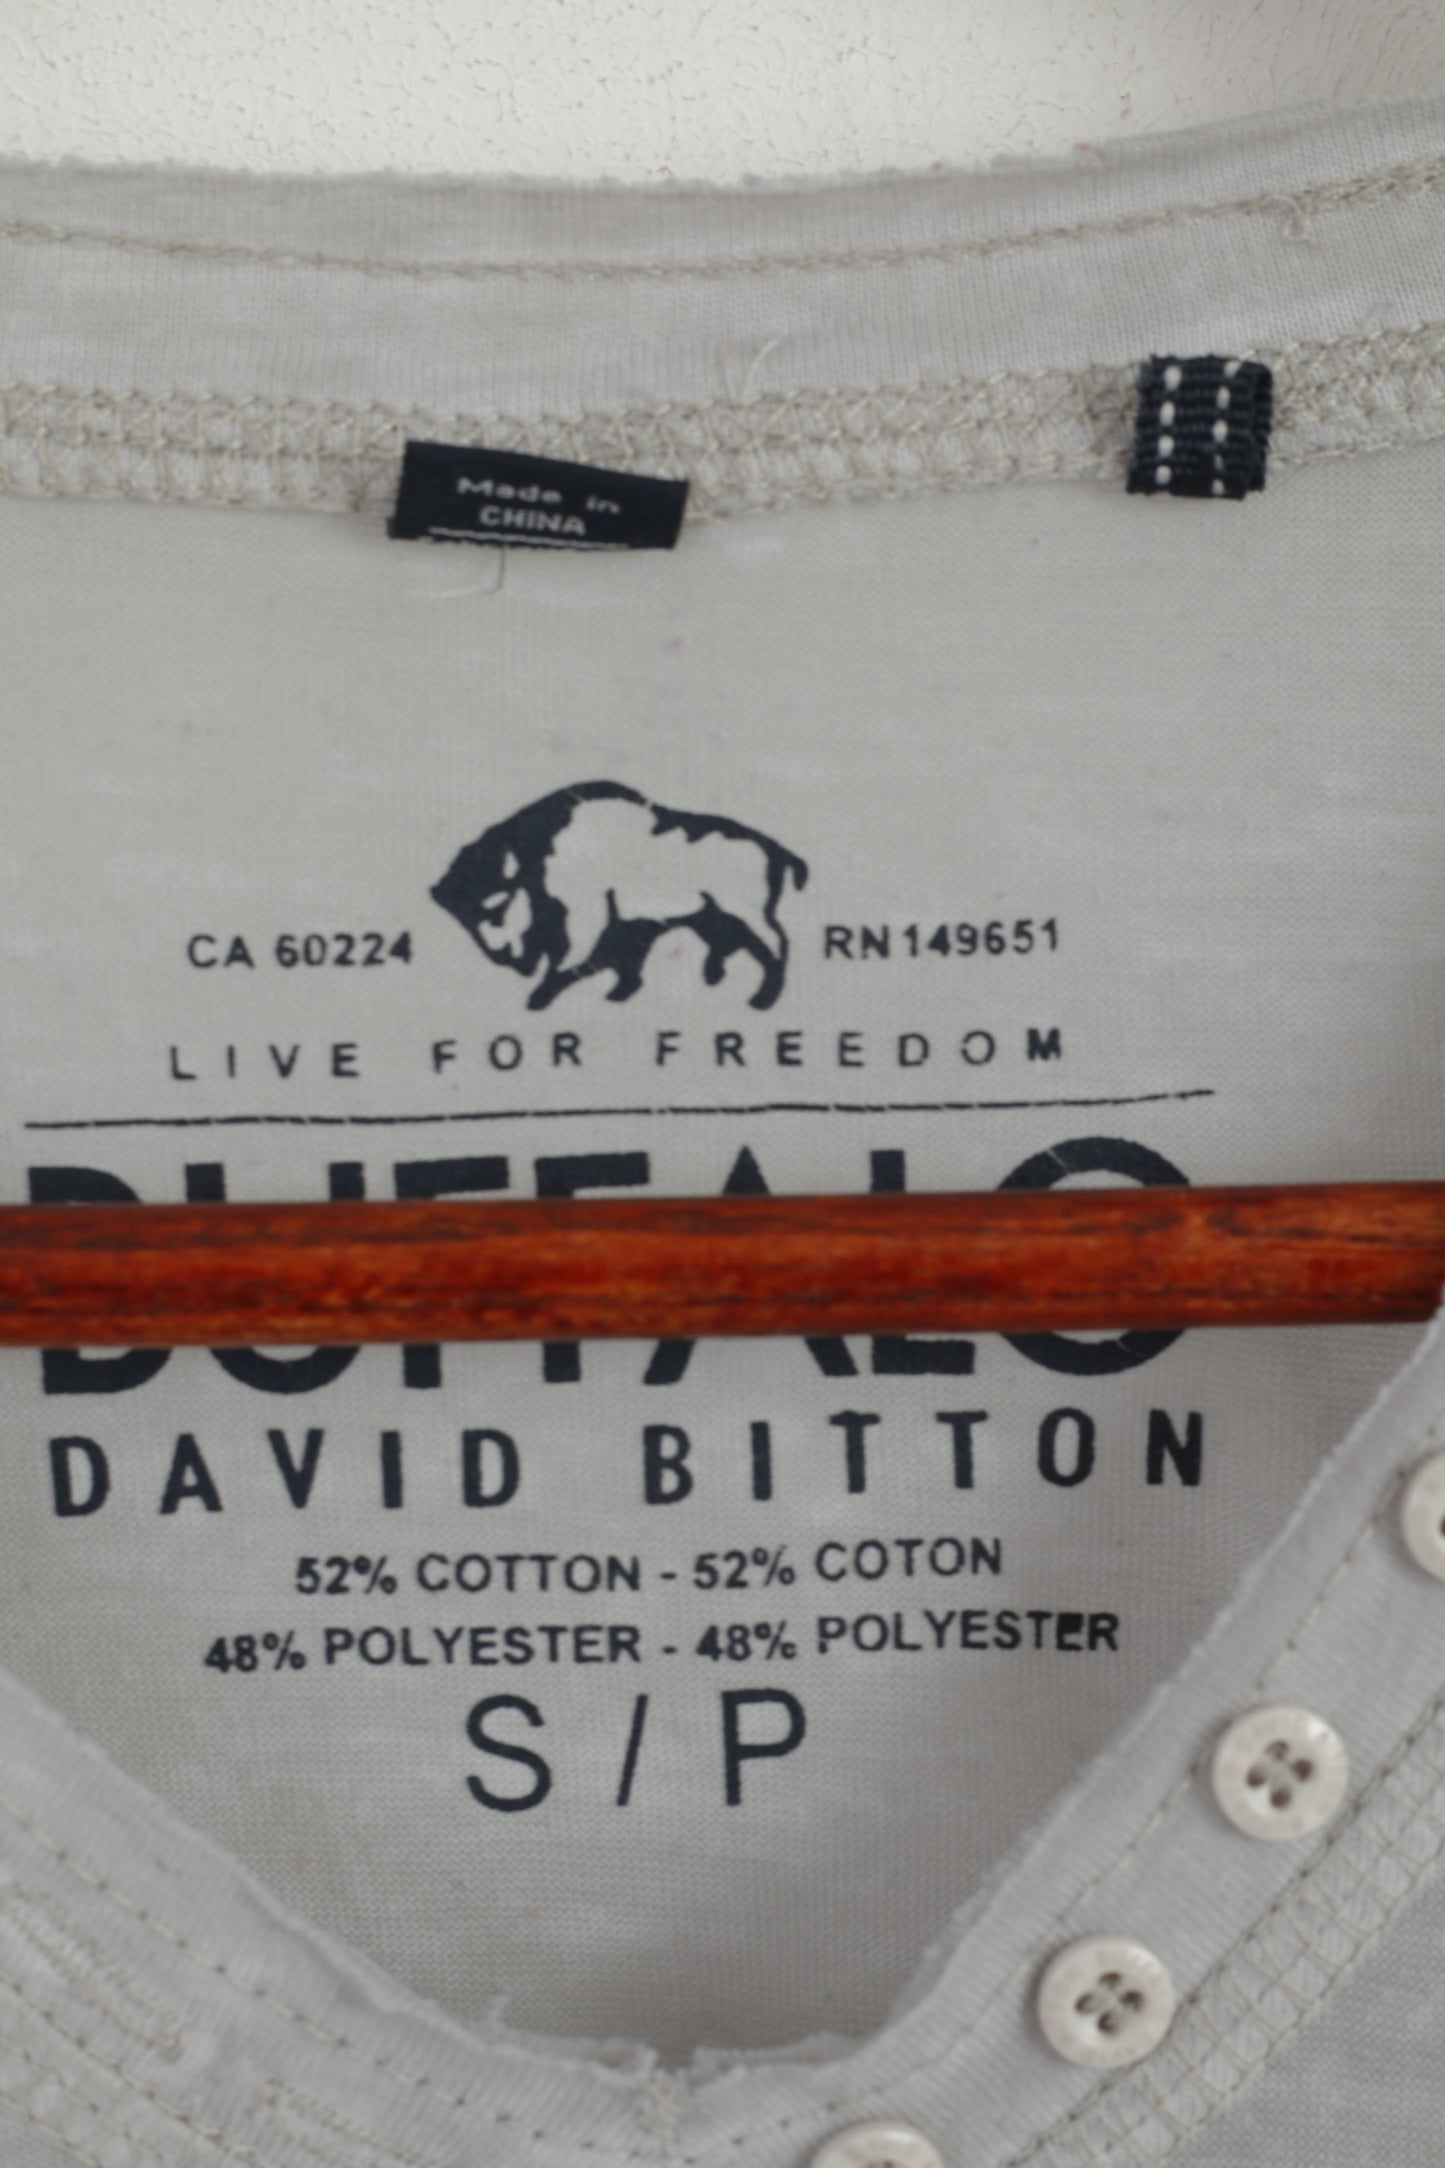 Buffalo David Bitton Men S Shirt Grey Cotton Stretch V Neck thin Material Fit Top